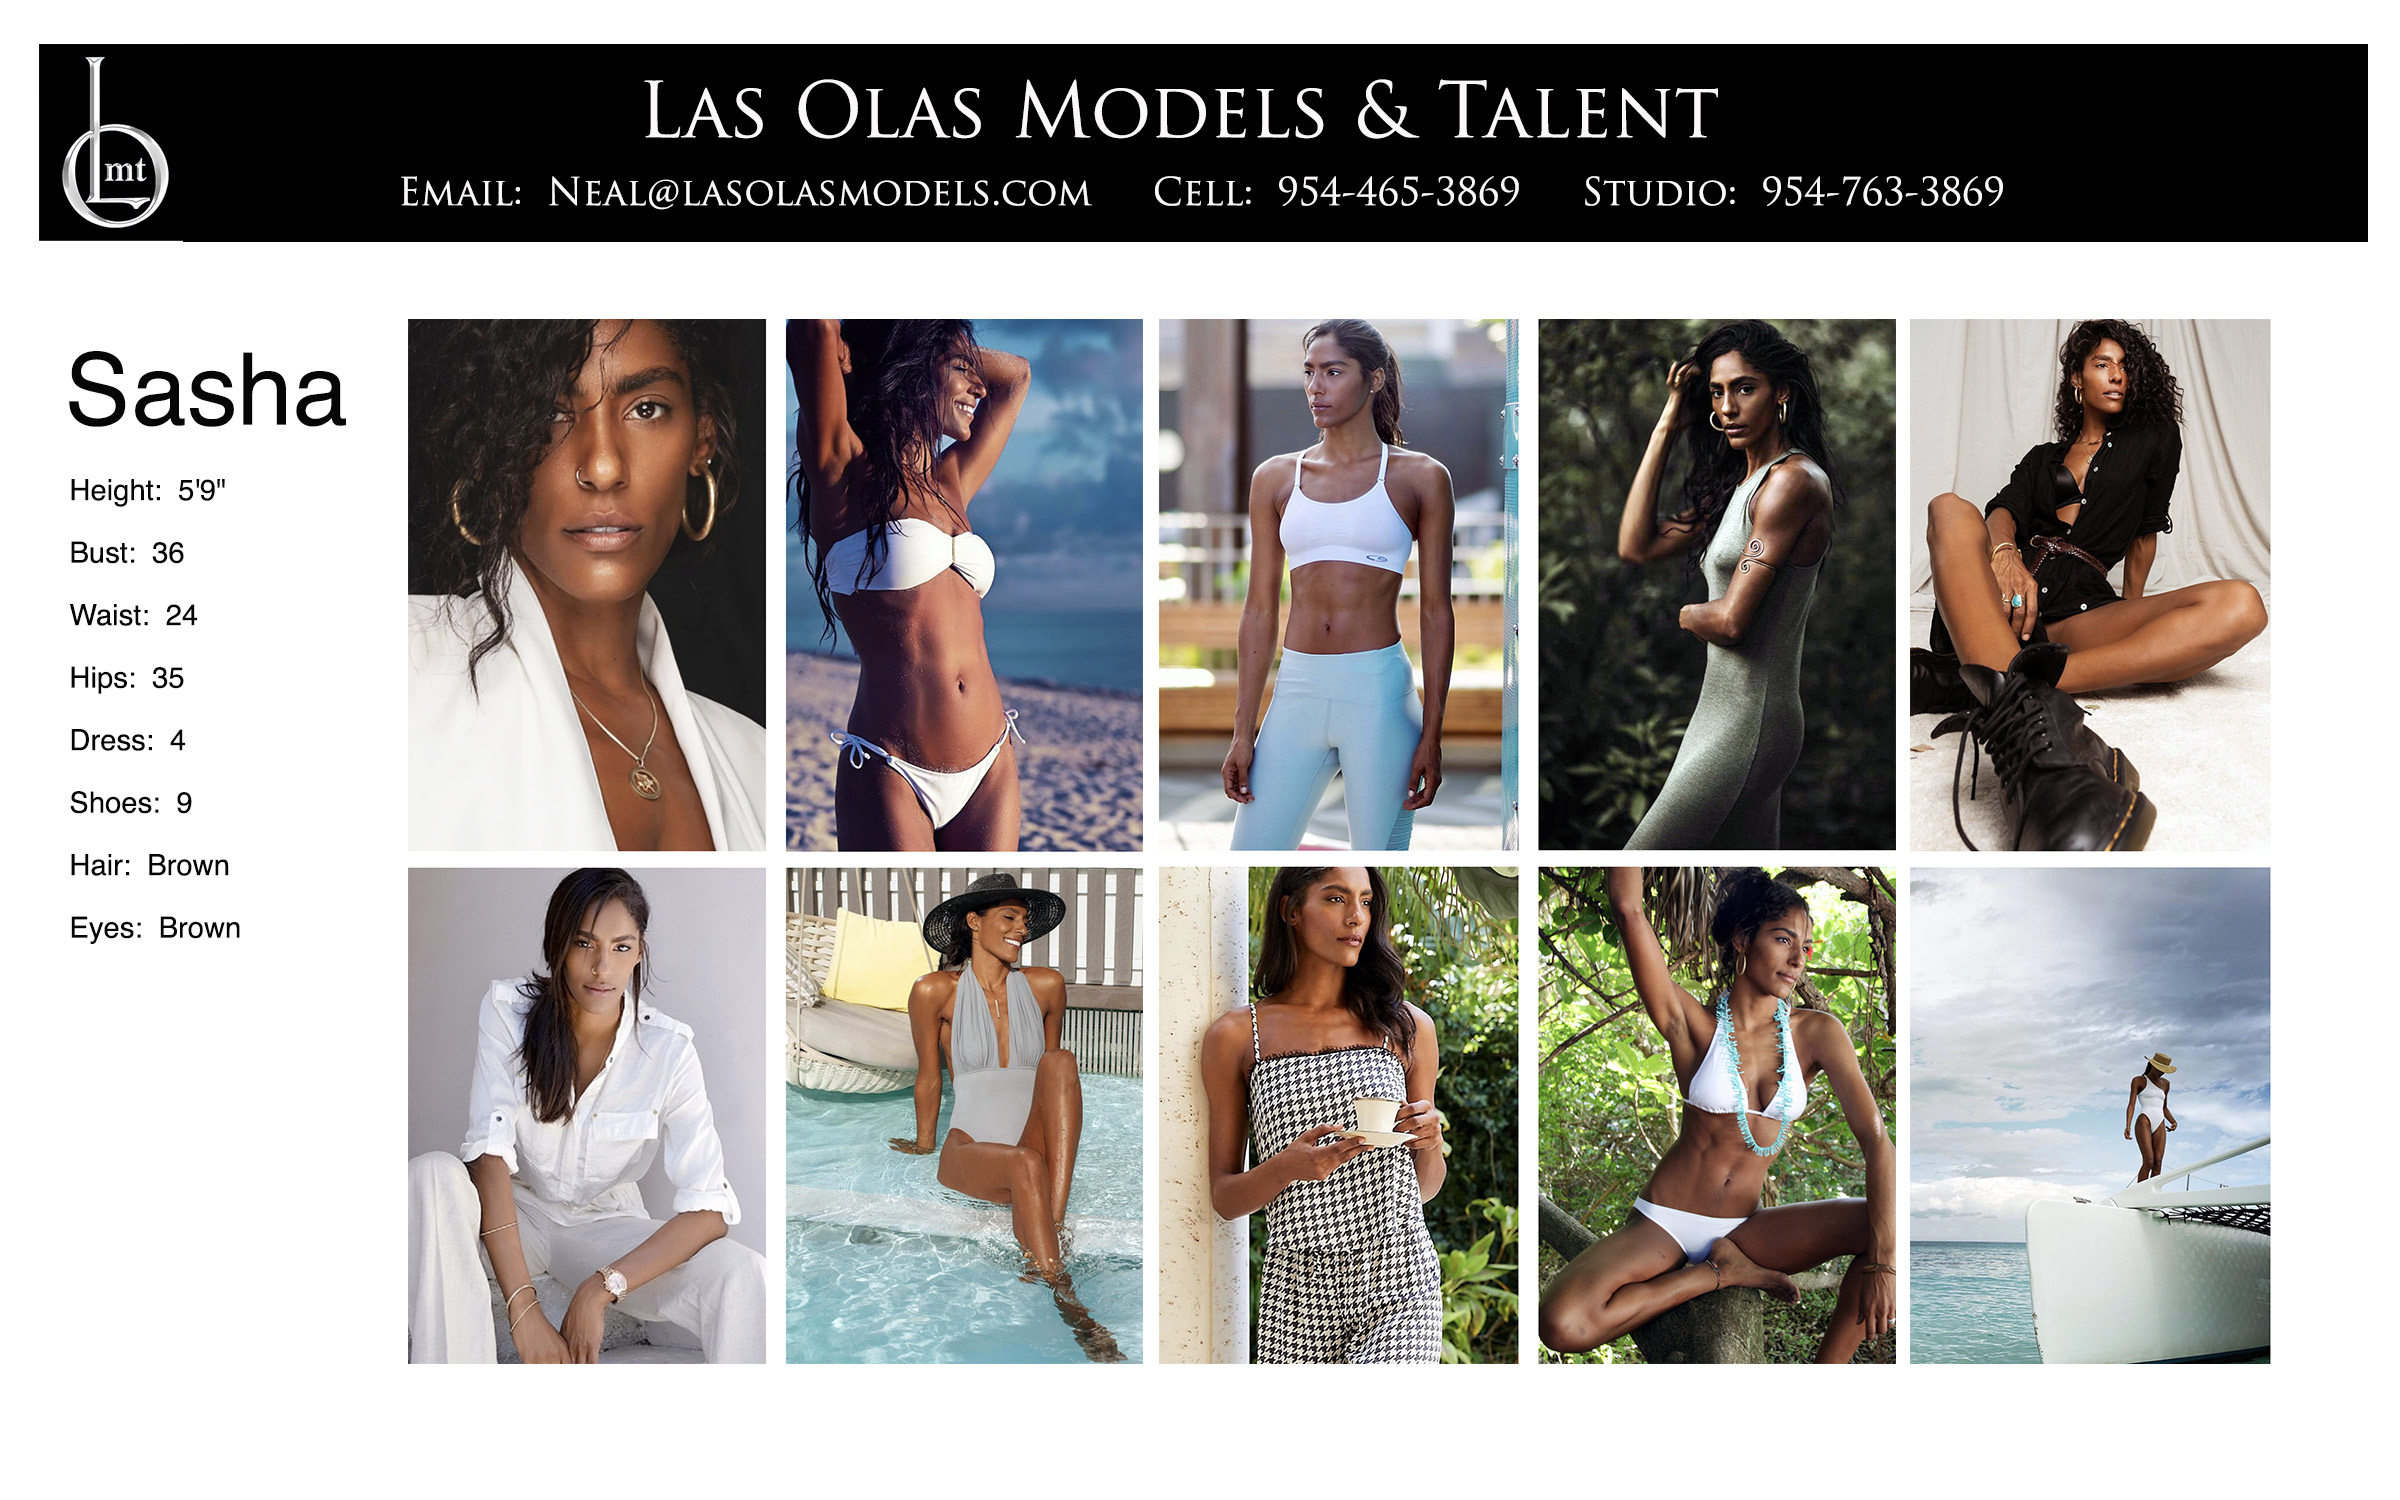 Models Fort Lauderdale Miami South Florida Print Video Commercial Las Olas Models & Talent - Sasha comp